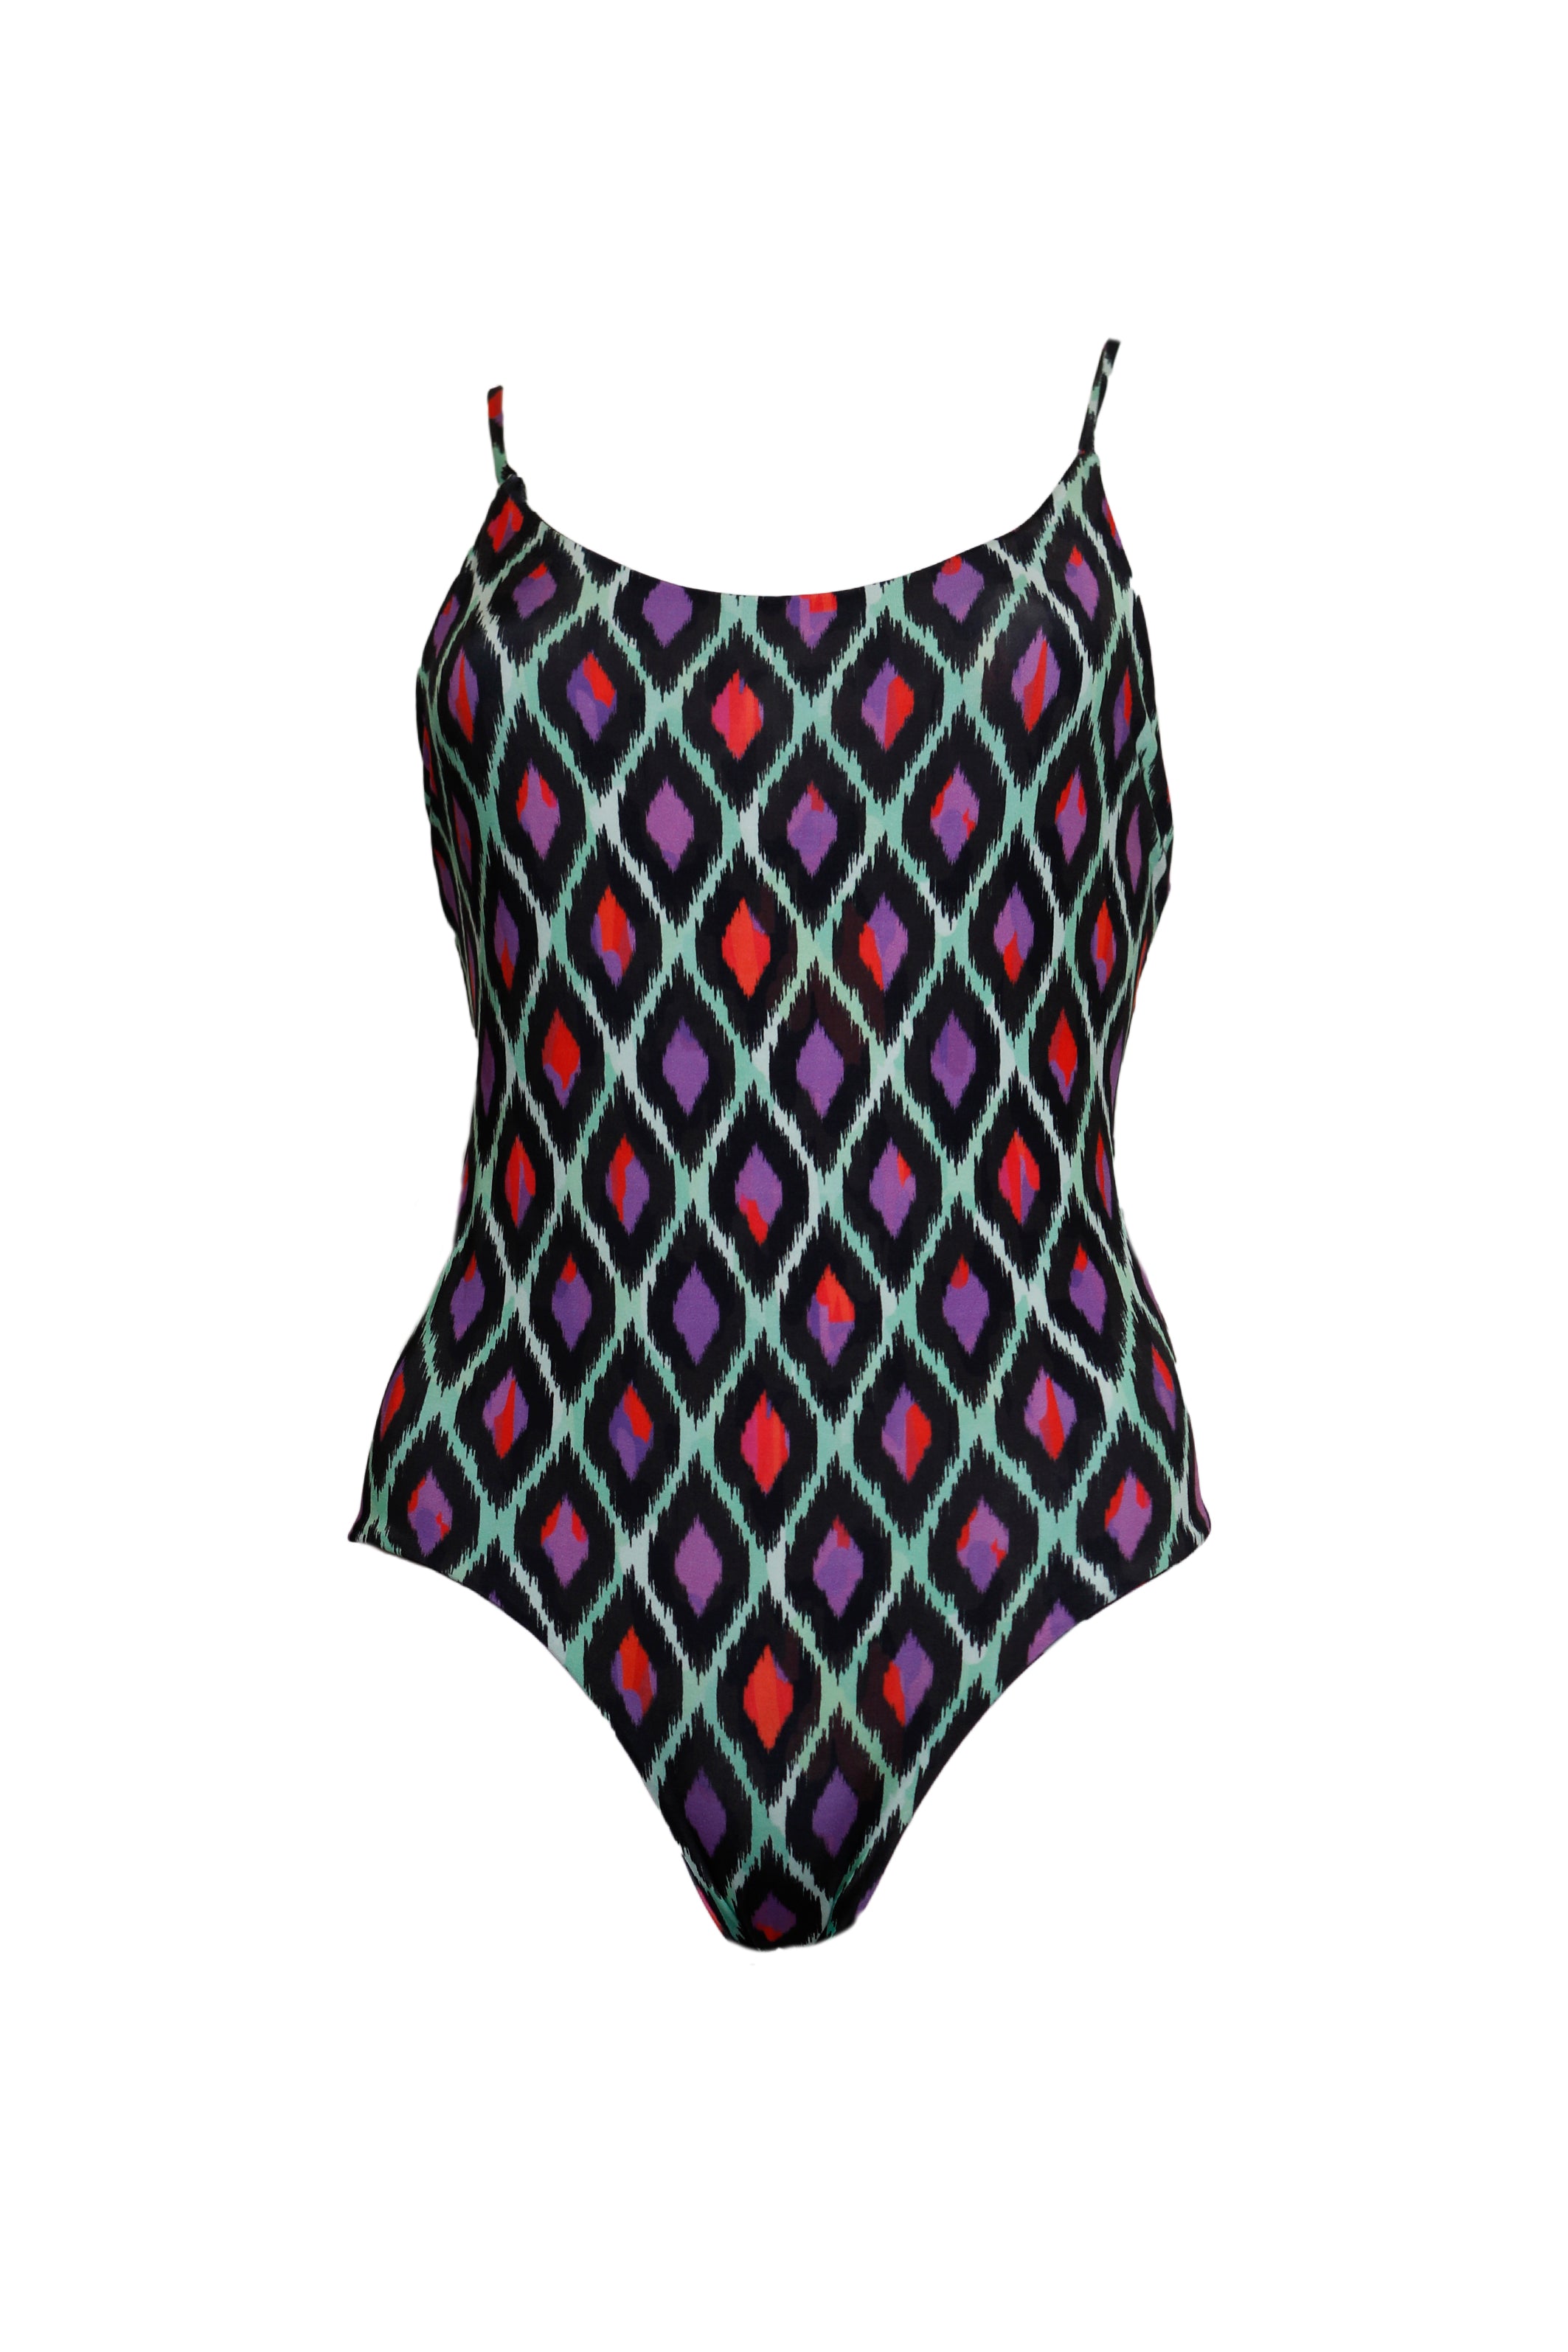 FEDERICA - One-piece swimsuit in Rombi print lycra